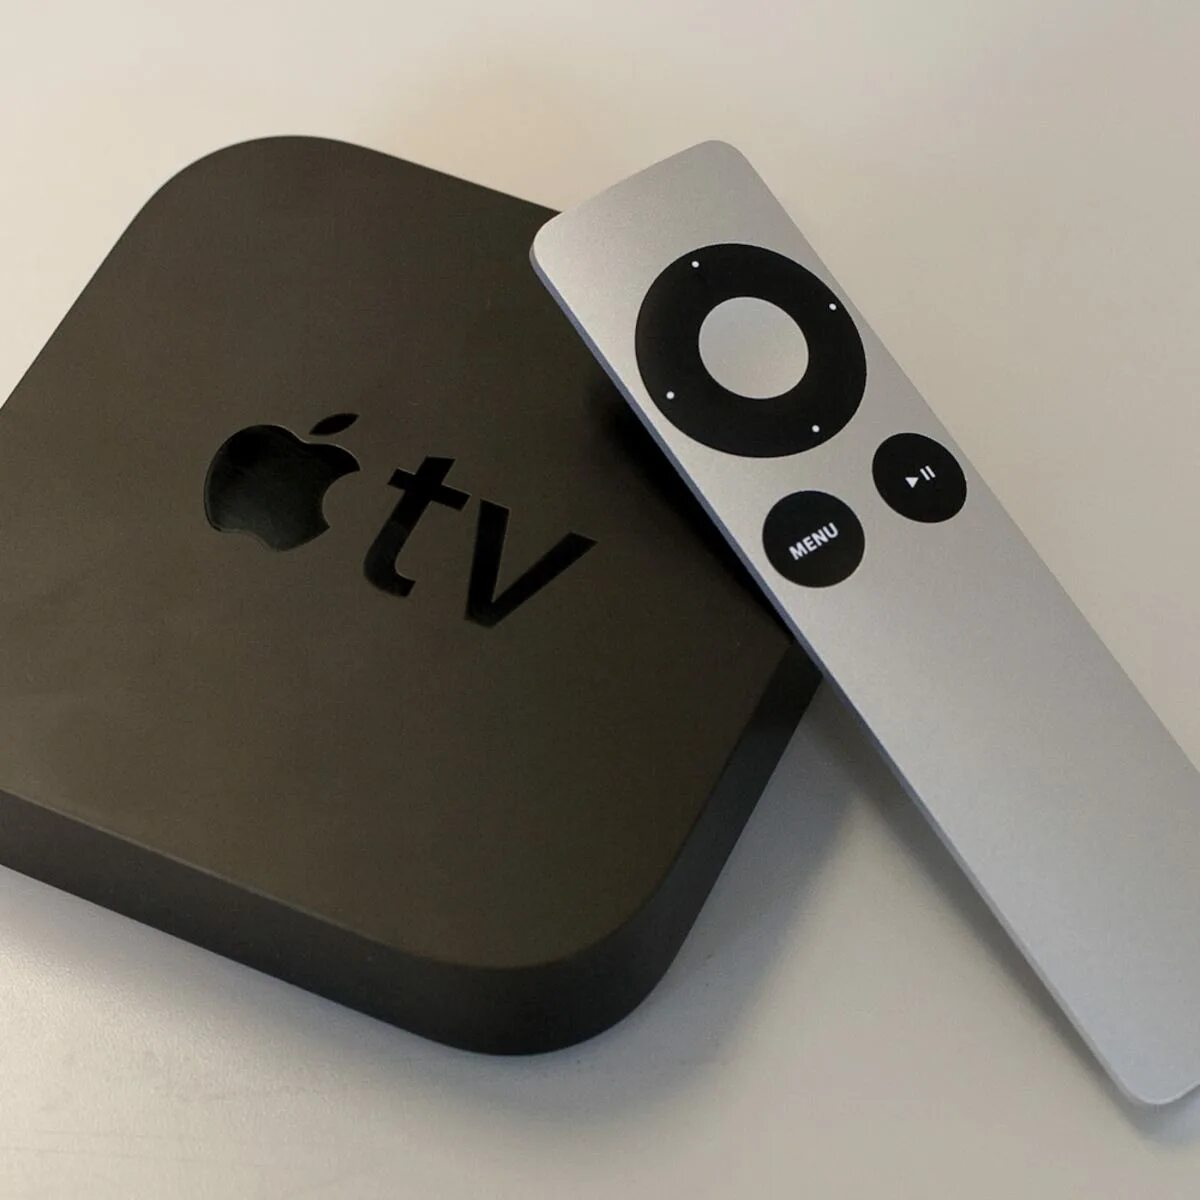 Apple TV a1469. Apple TV 3. Apple TV 2022. Tv3 4